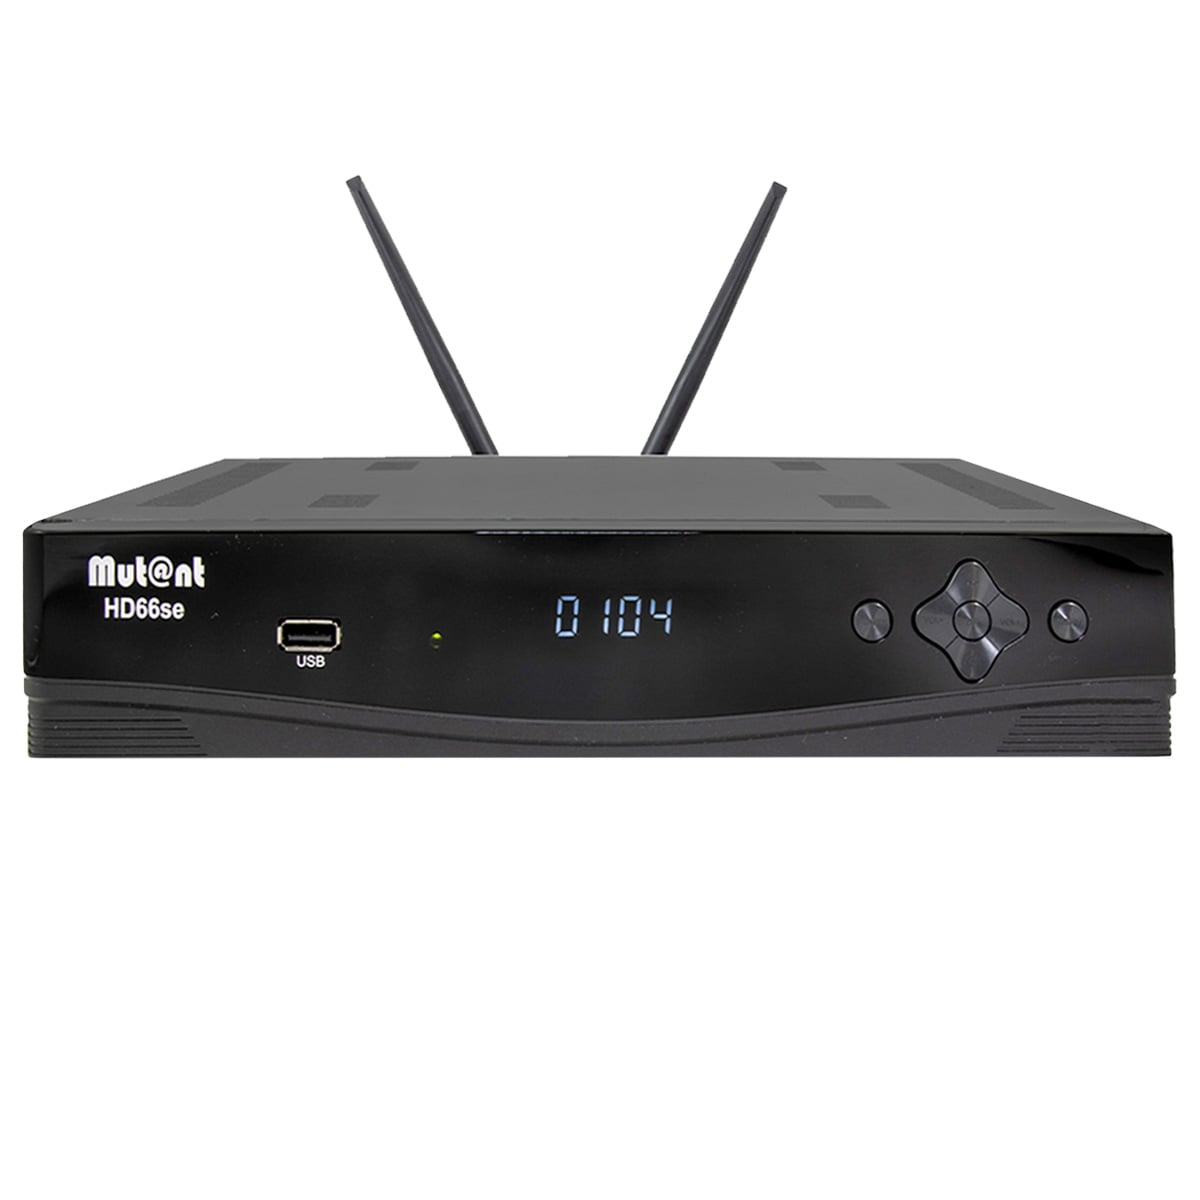 Sat-Receiver HD66 SE DVB-S2, (H.265), DVB-C, DVB-T2 Tuner, Twin (PVR-Funktion=optional, MUT@NT DVB-C2, Schwarz) Combo-Receiver